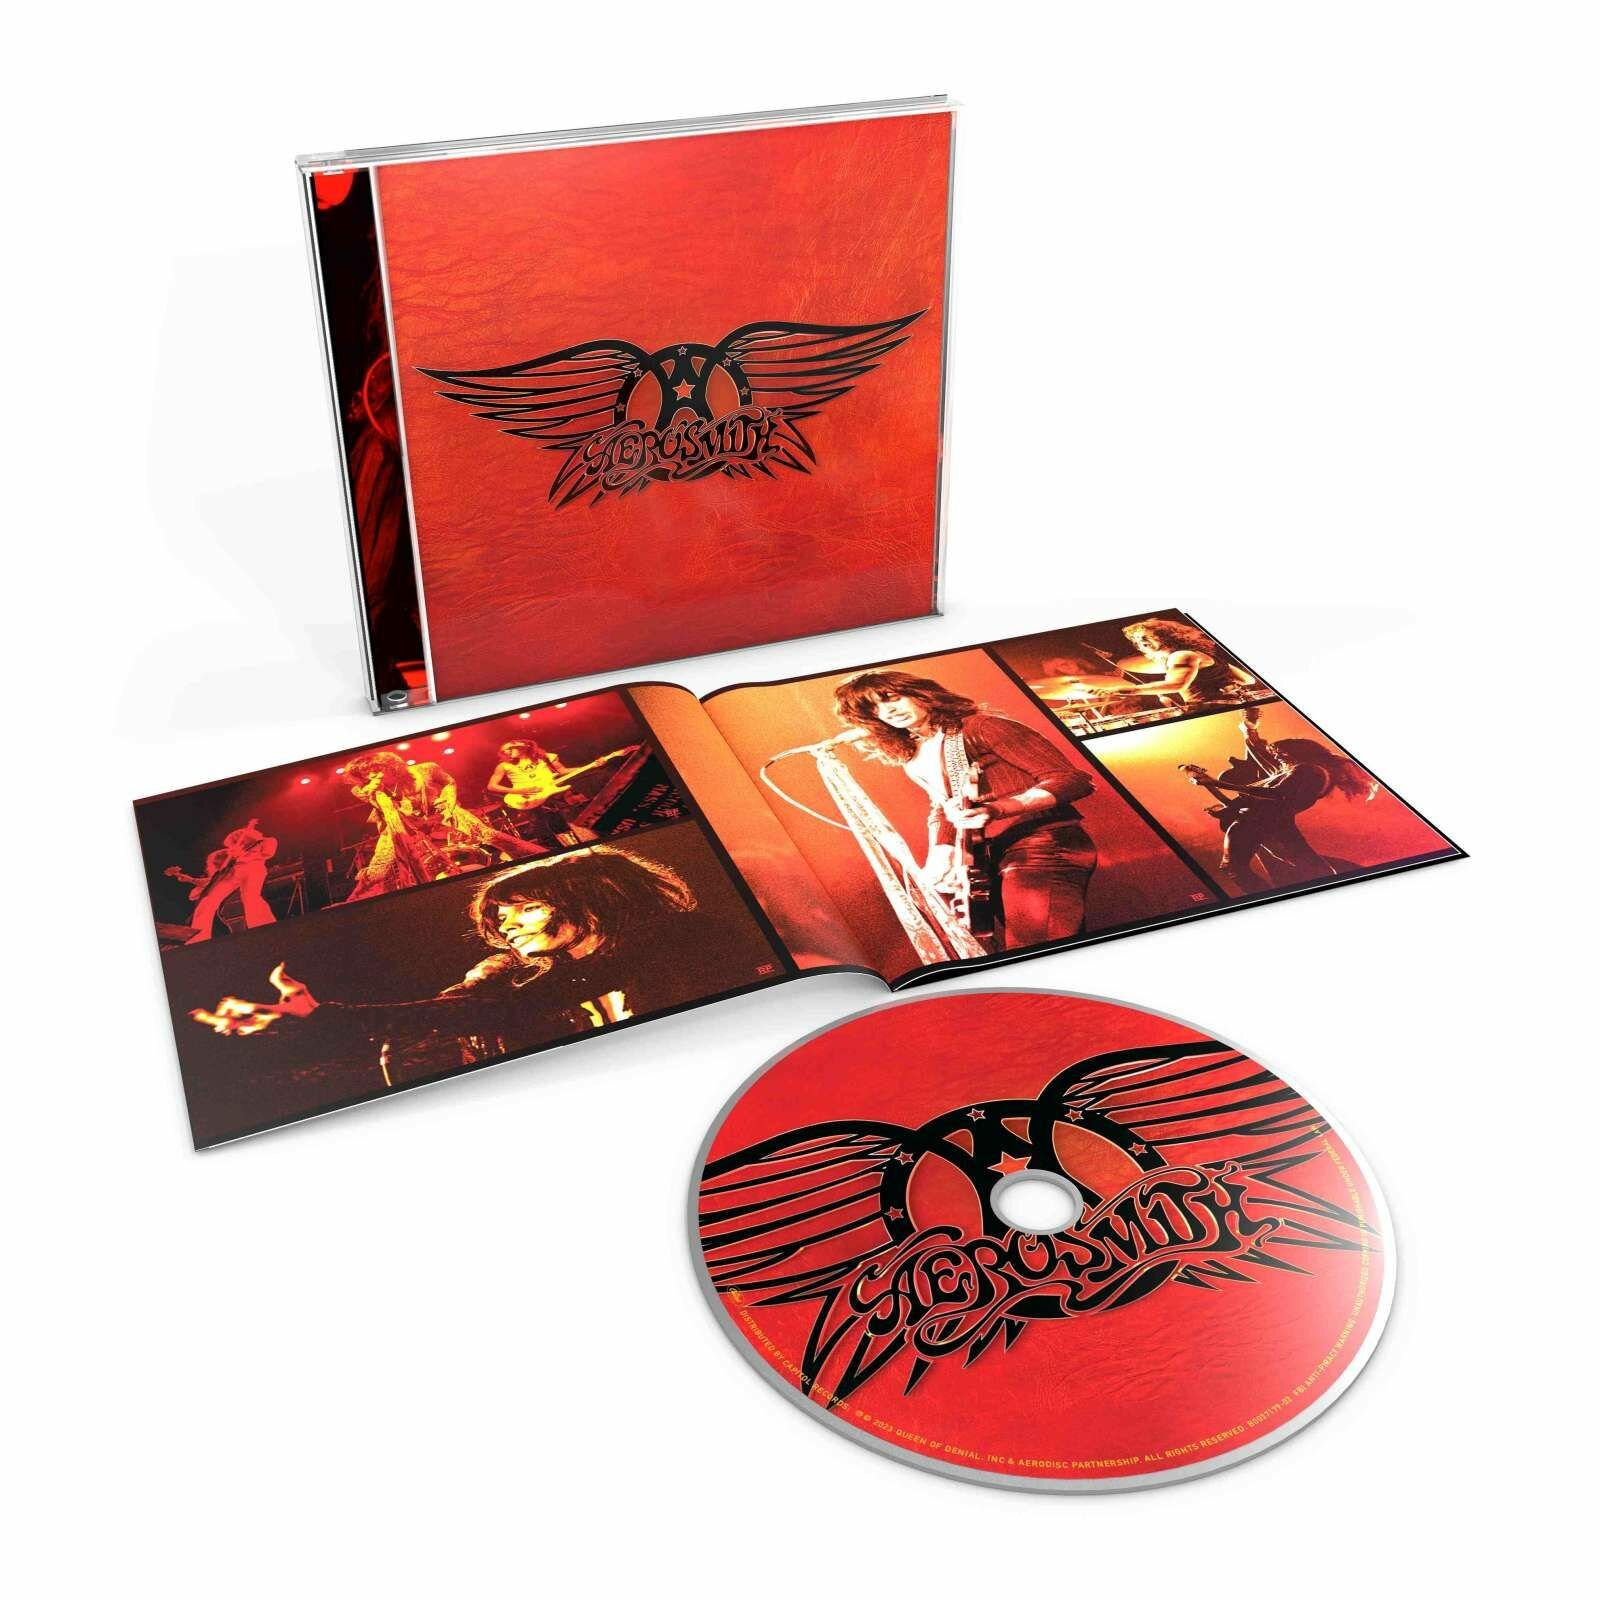 AUDIO CD Aerosmith - Greatest Hits